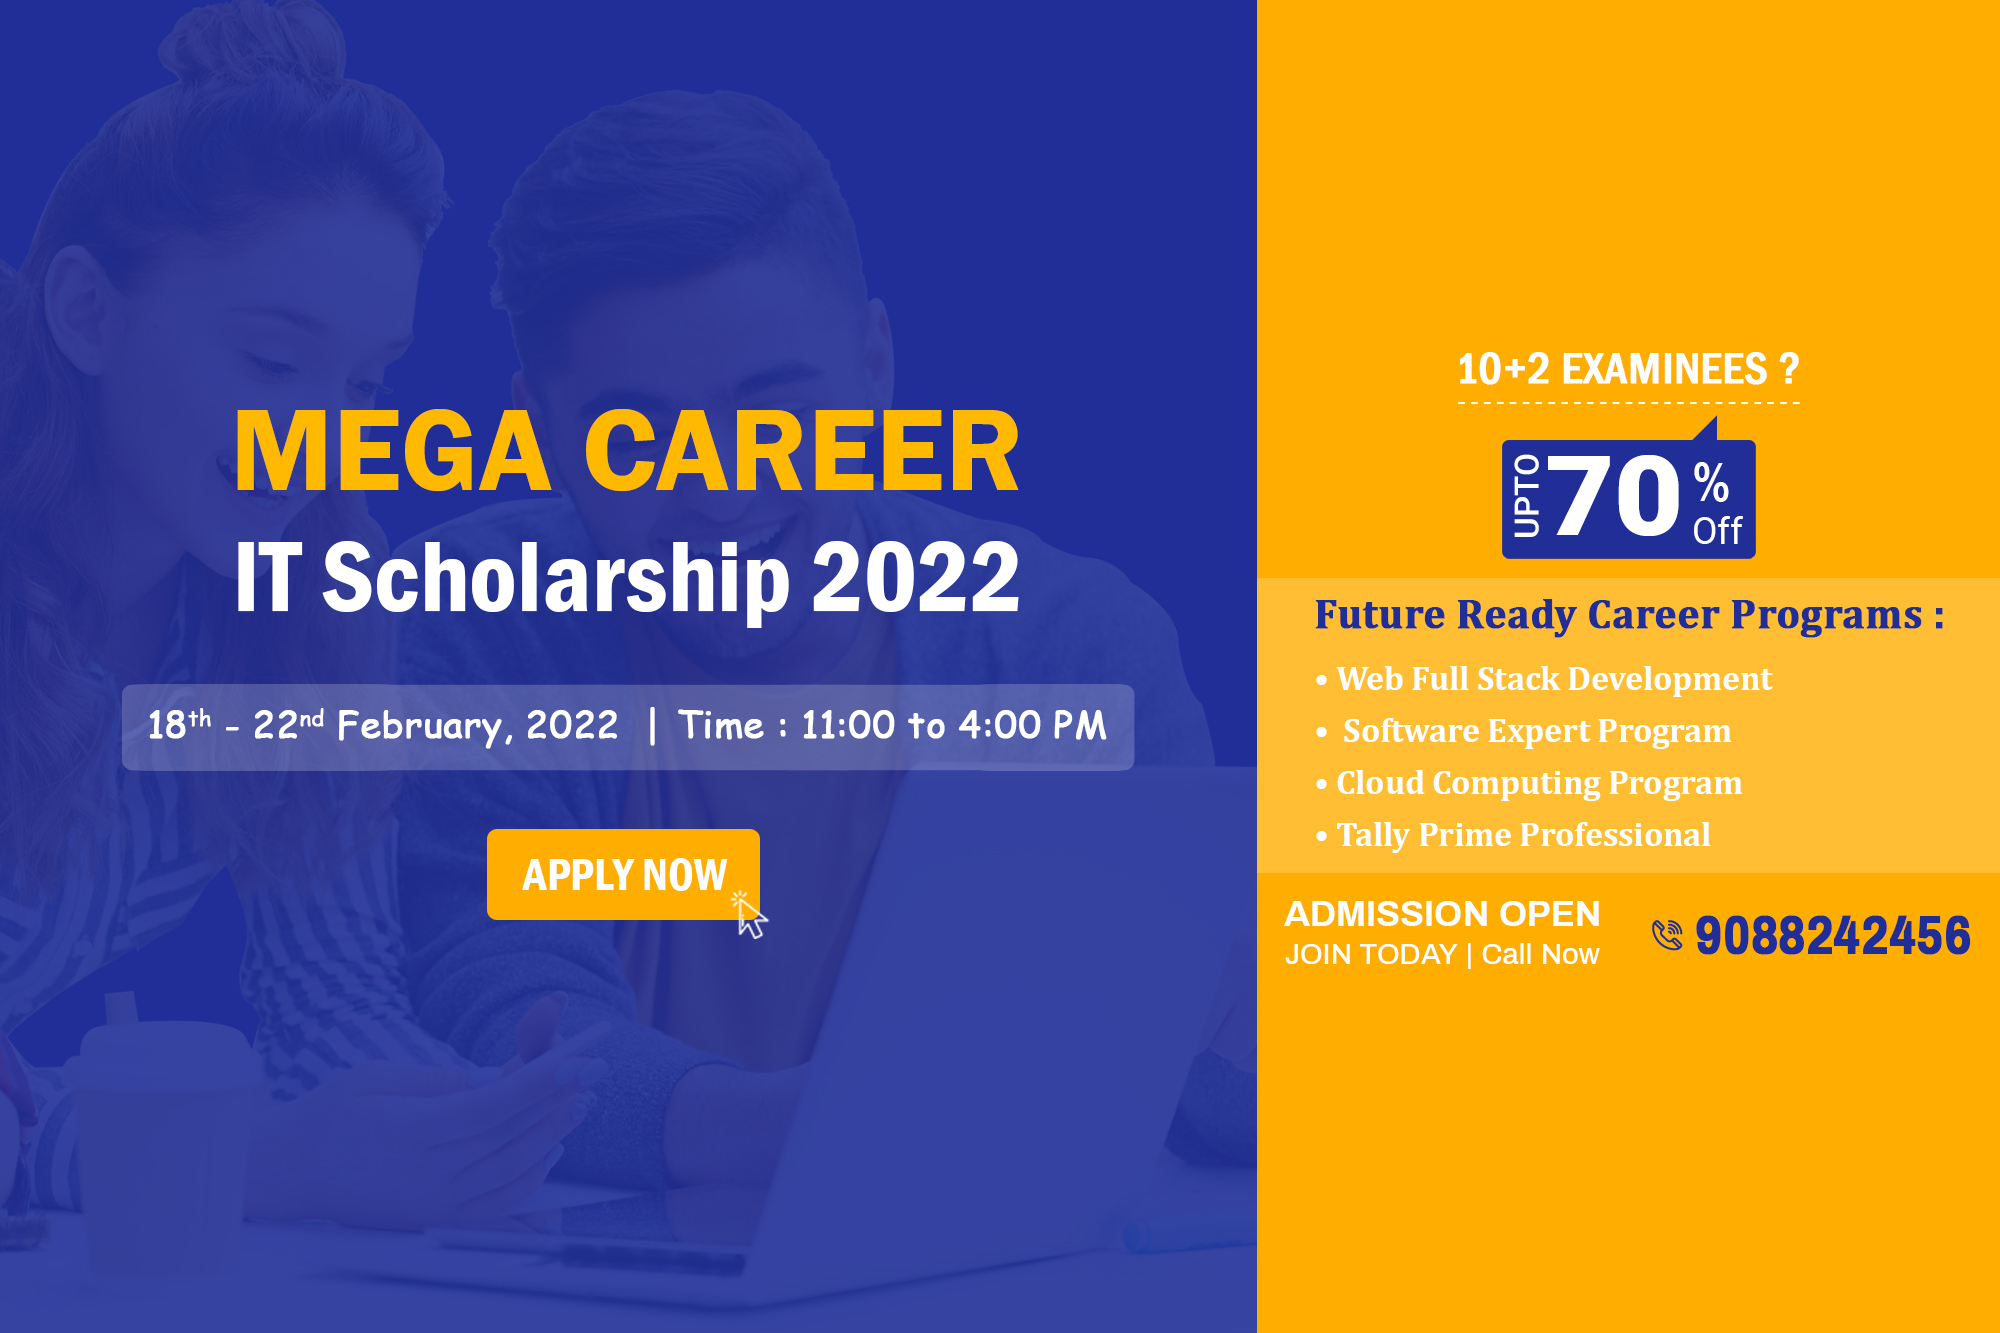 Mega Career - It Scholarship 2022